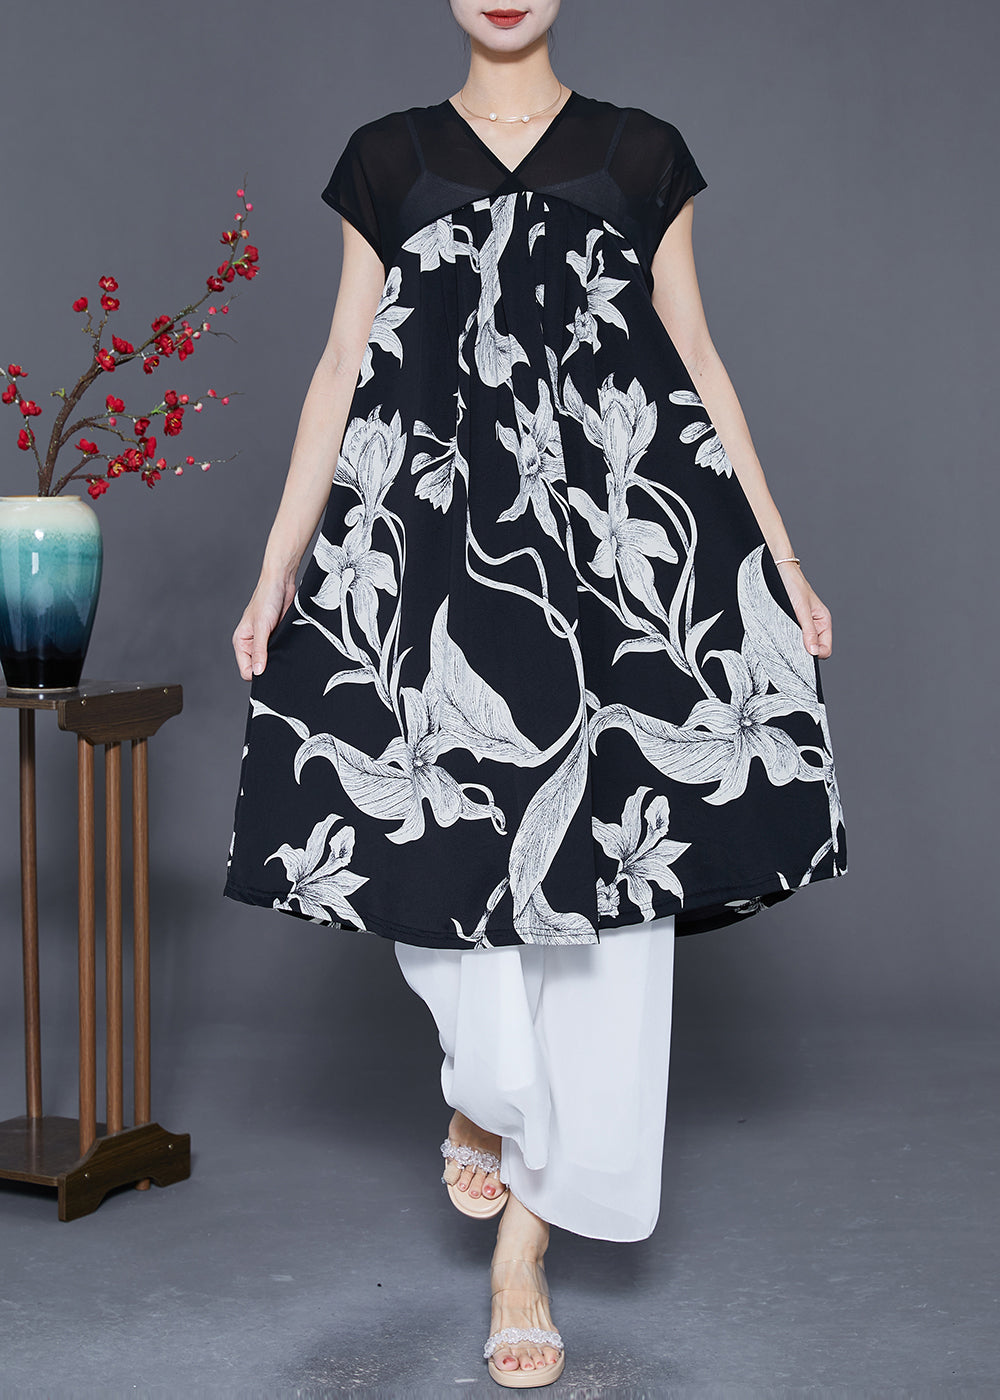 Classy White V Neck Print Chiffon A Line Dress Summer LY5535 - fabuloryshop